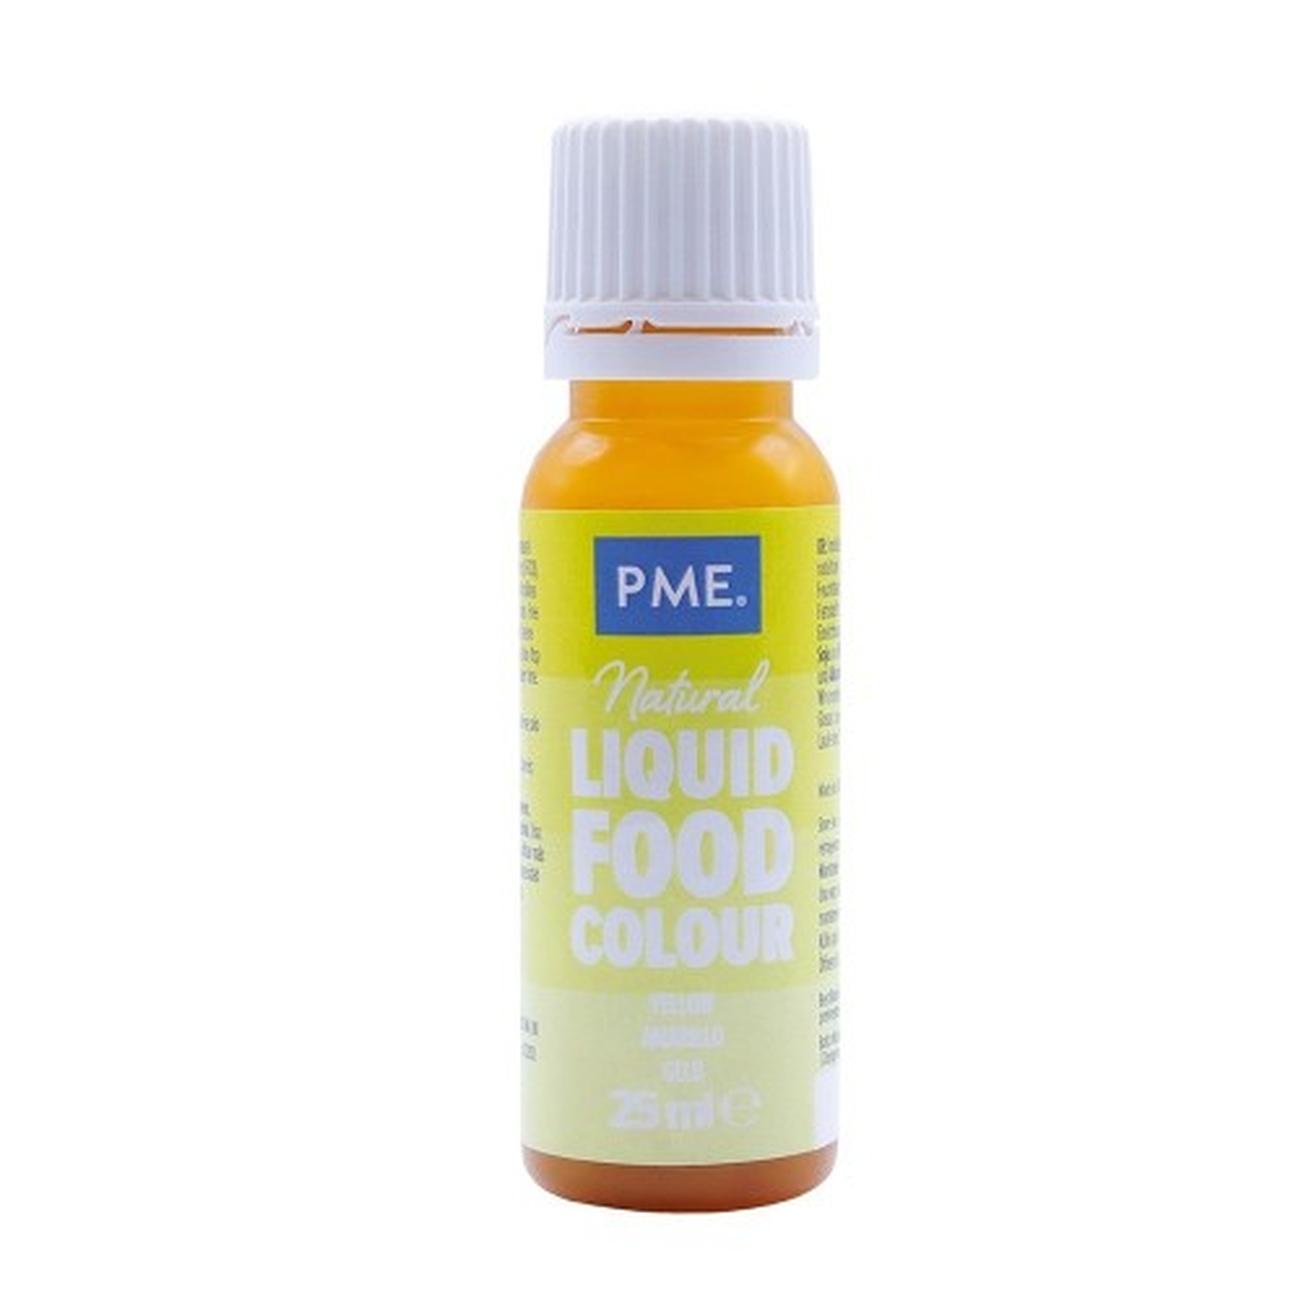 pmecake-natural-food-colour-lemon-yellow - PME 100% Natural Food Colour Lemon Yellow